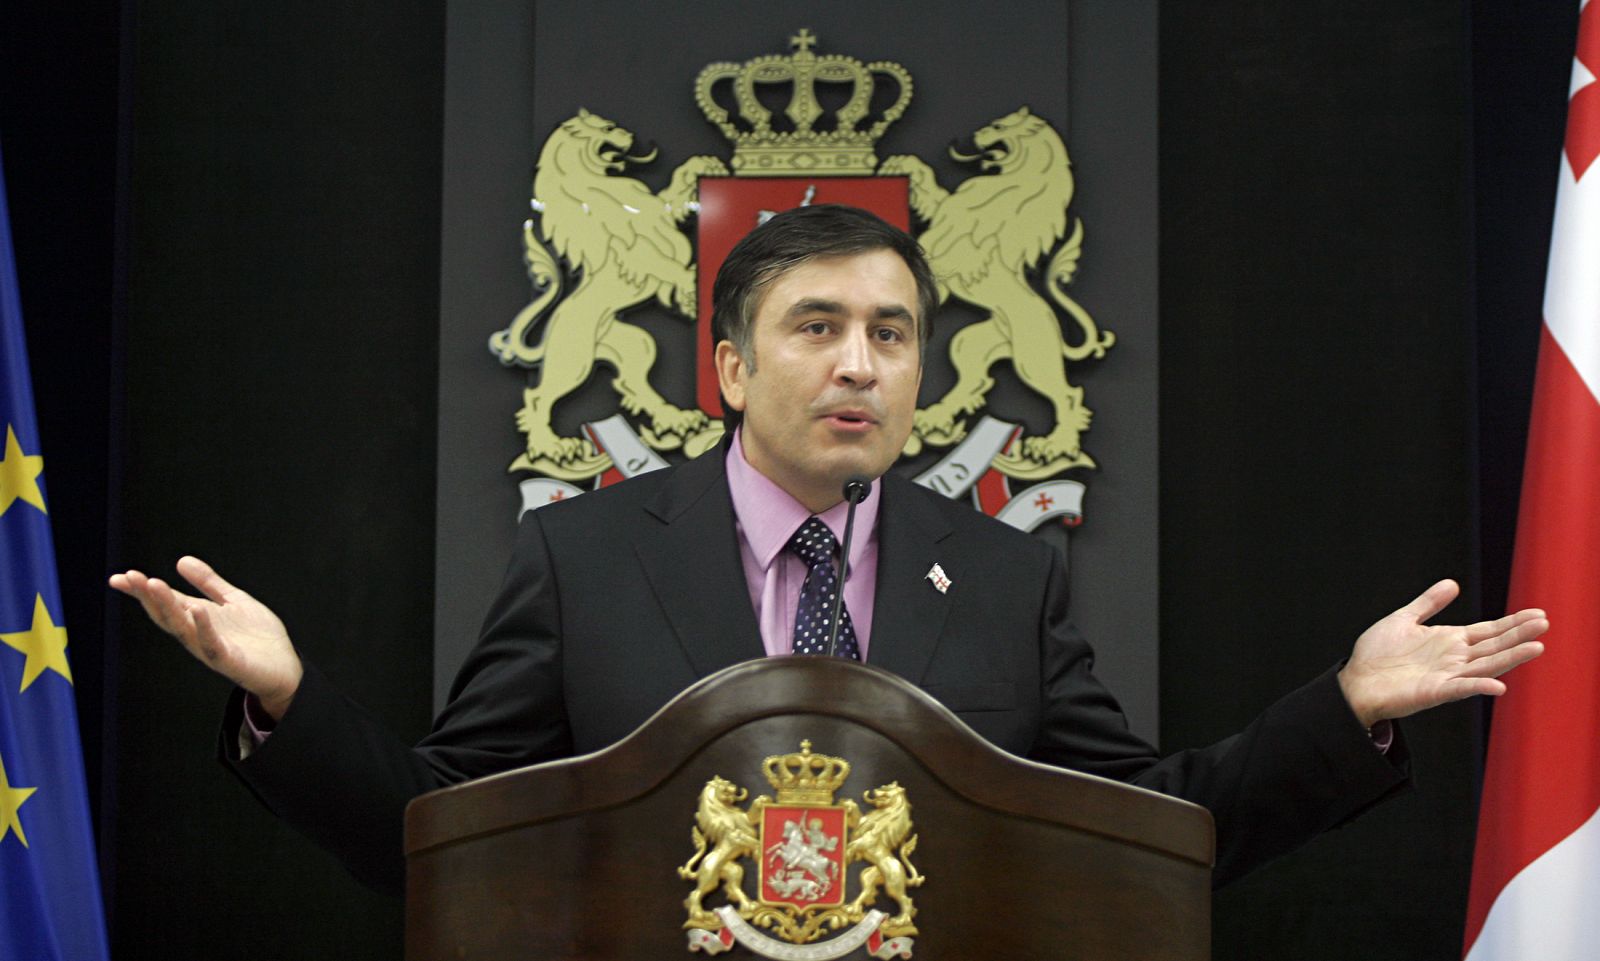 El primer ministro de Georgia, Saakashvili, comparece en rueda de prensa.